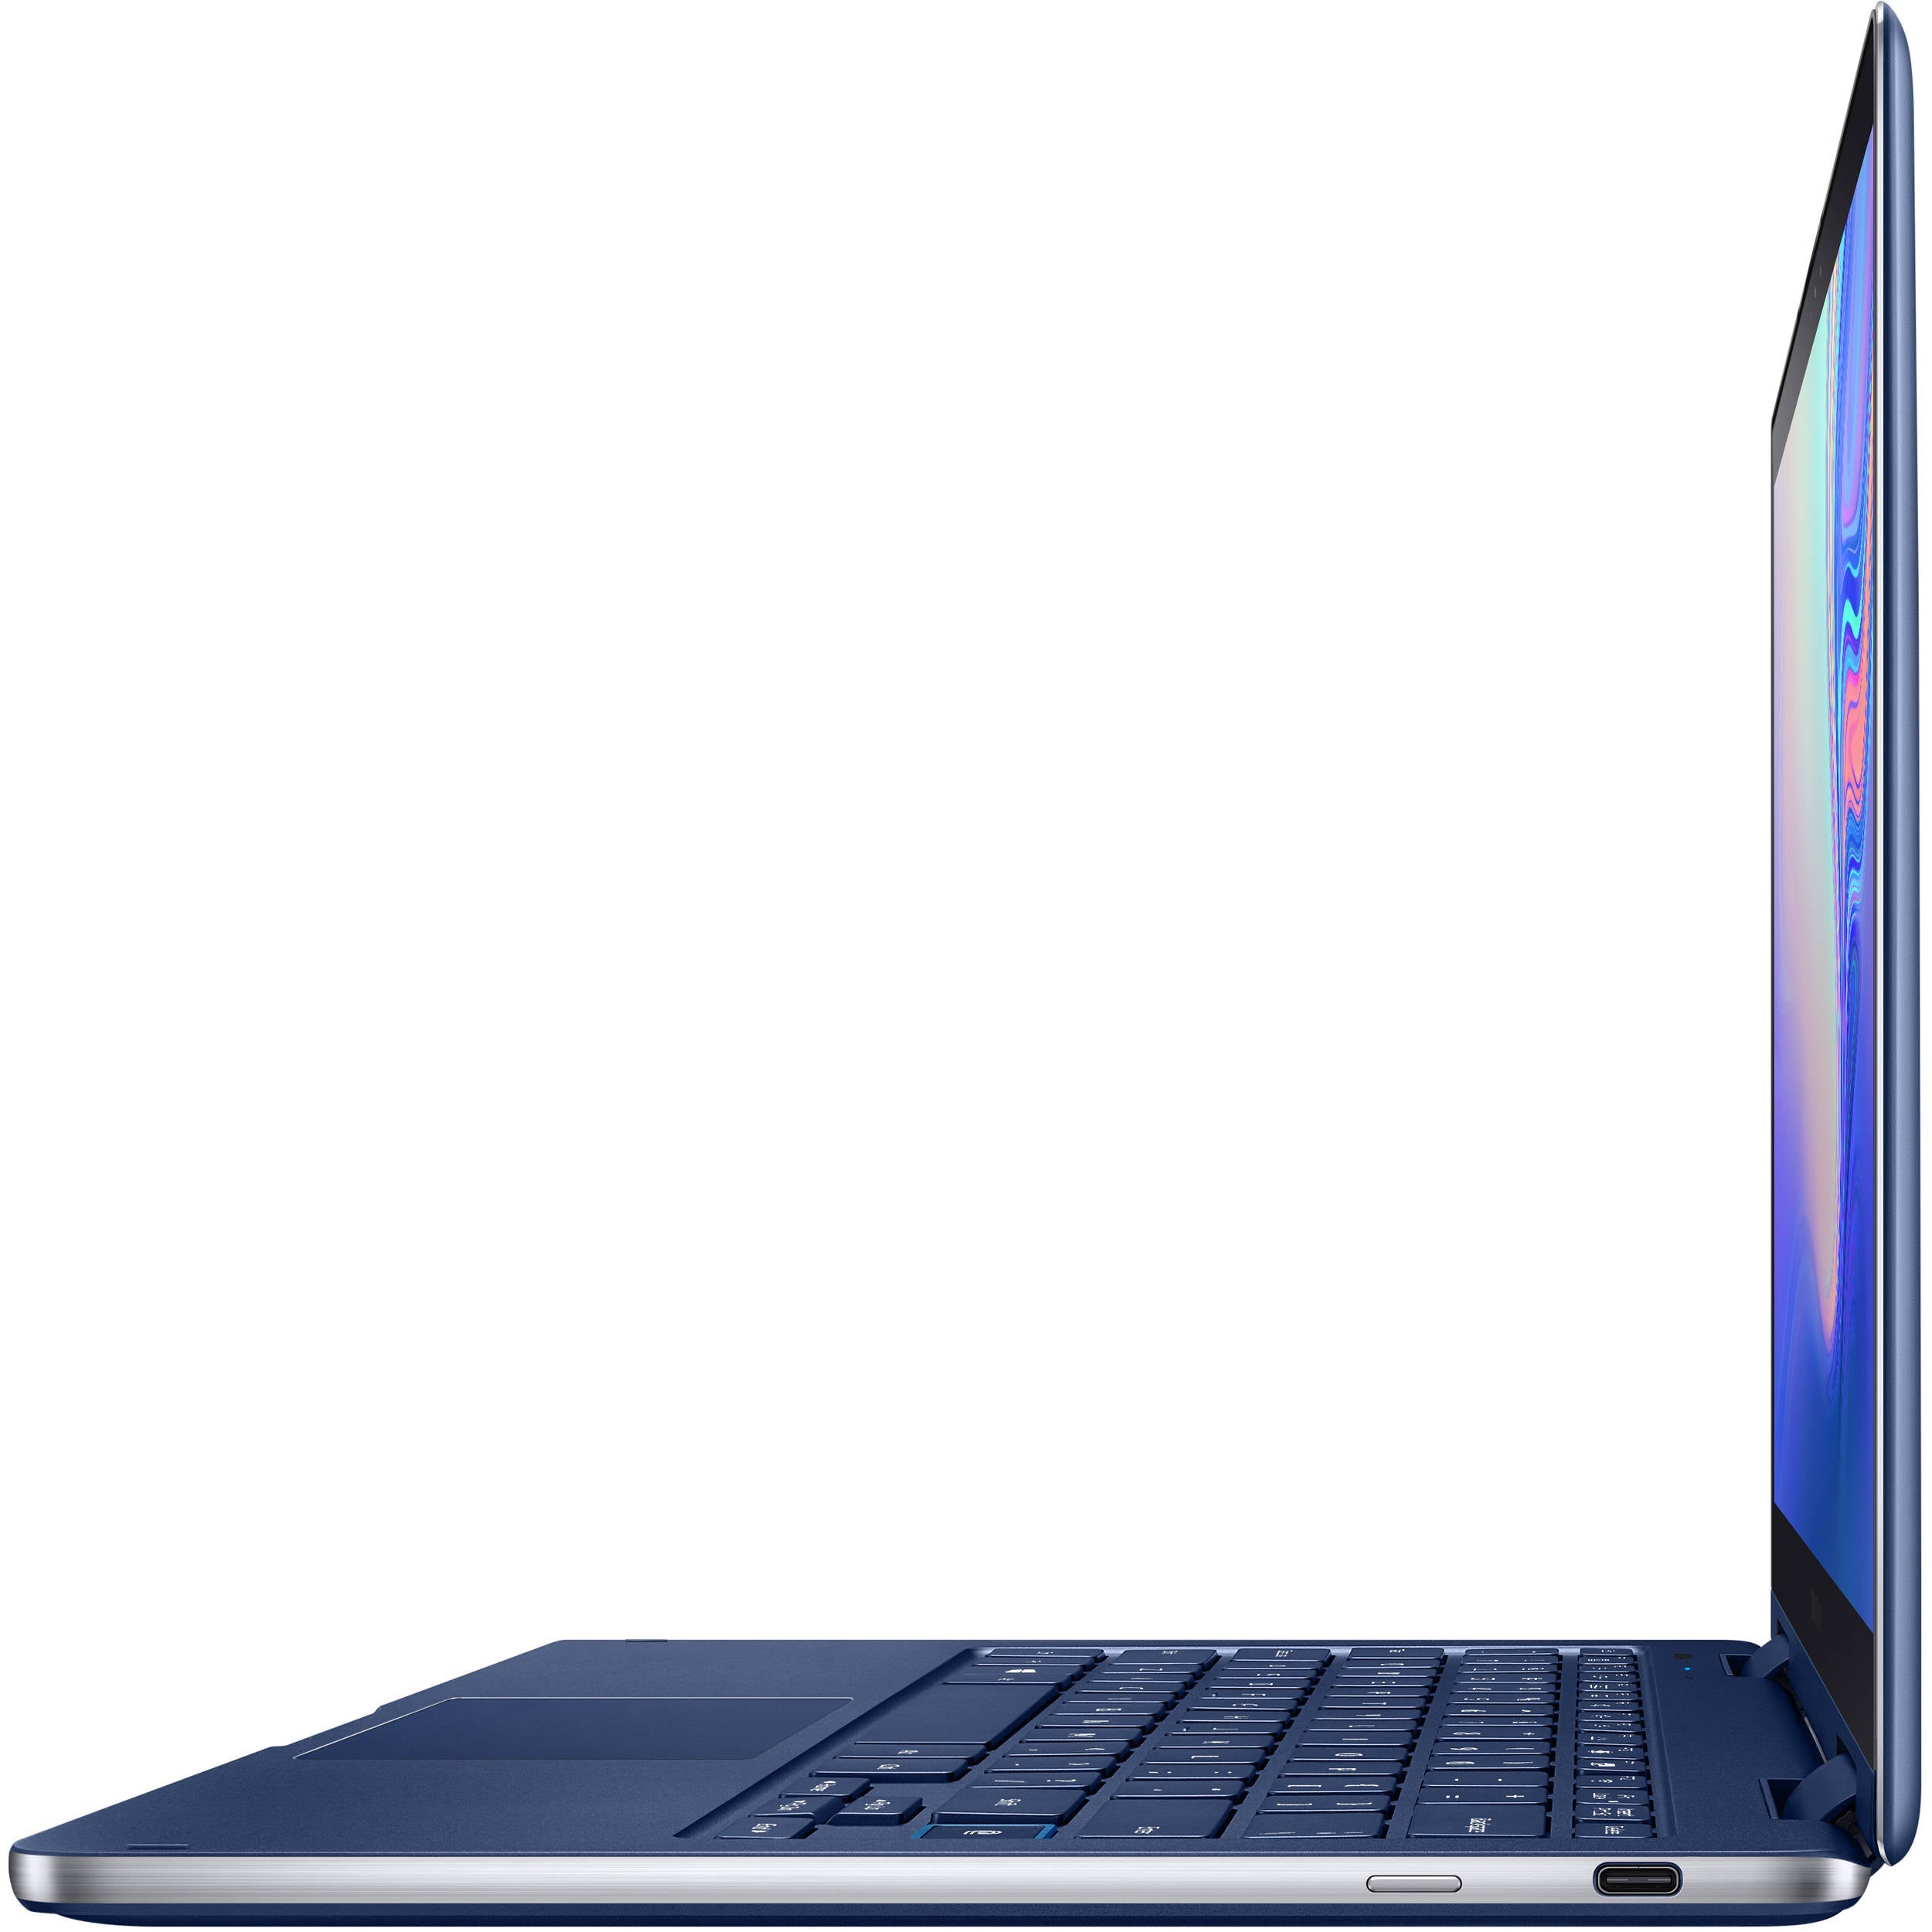 Samsung NP950SBE-X01US-RB Notebook 9 Pen 15" FHD i7-8565U 16GB 1TB W10H, Blue - Certified Refurbished